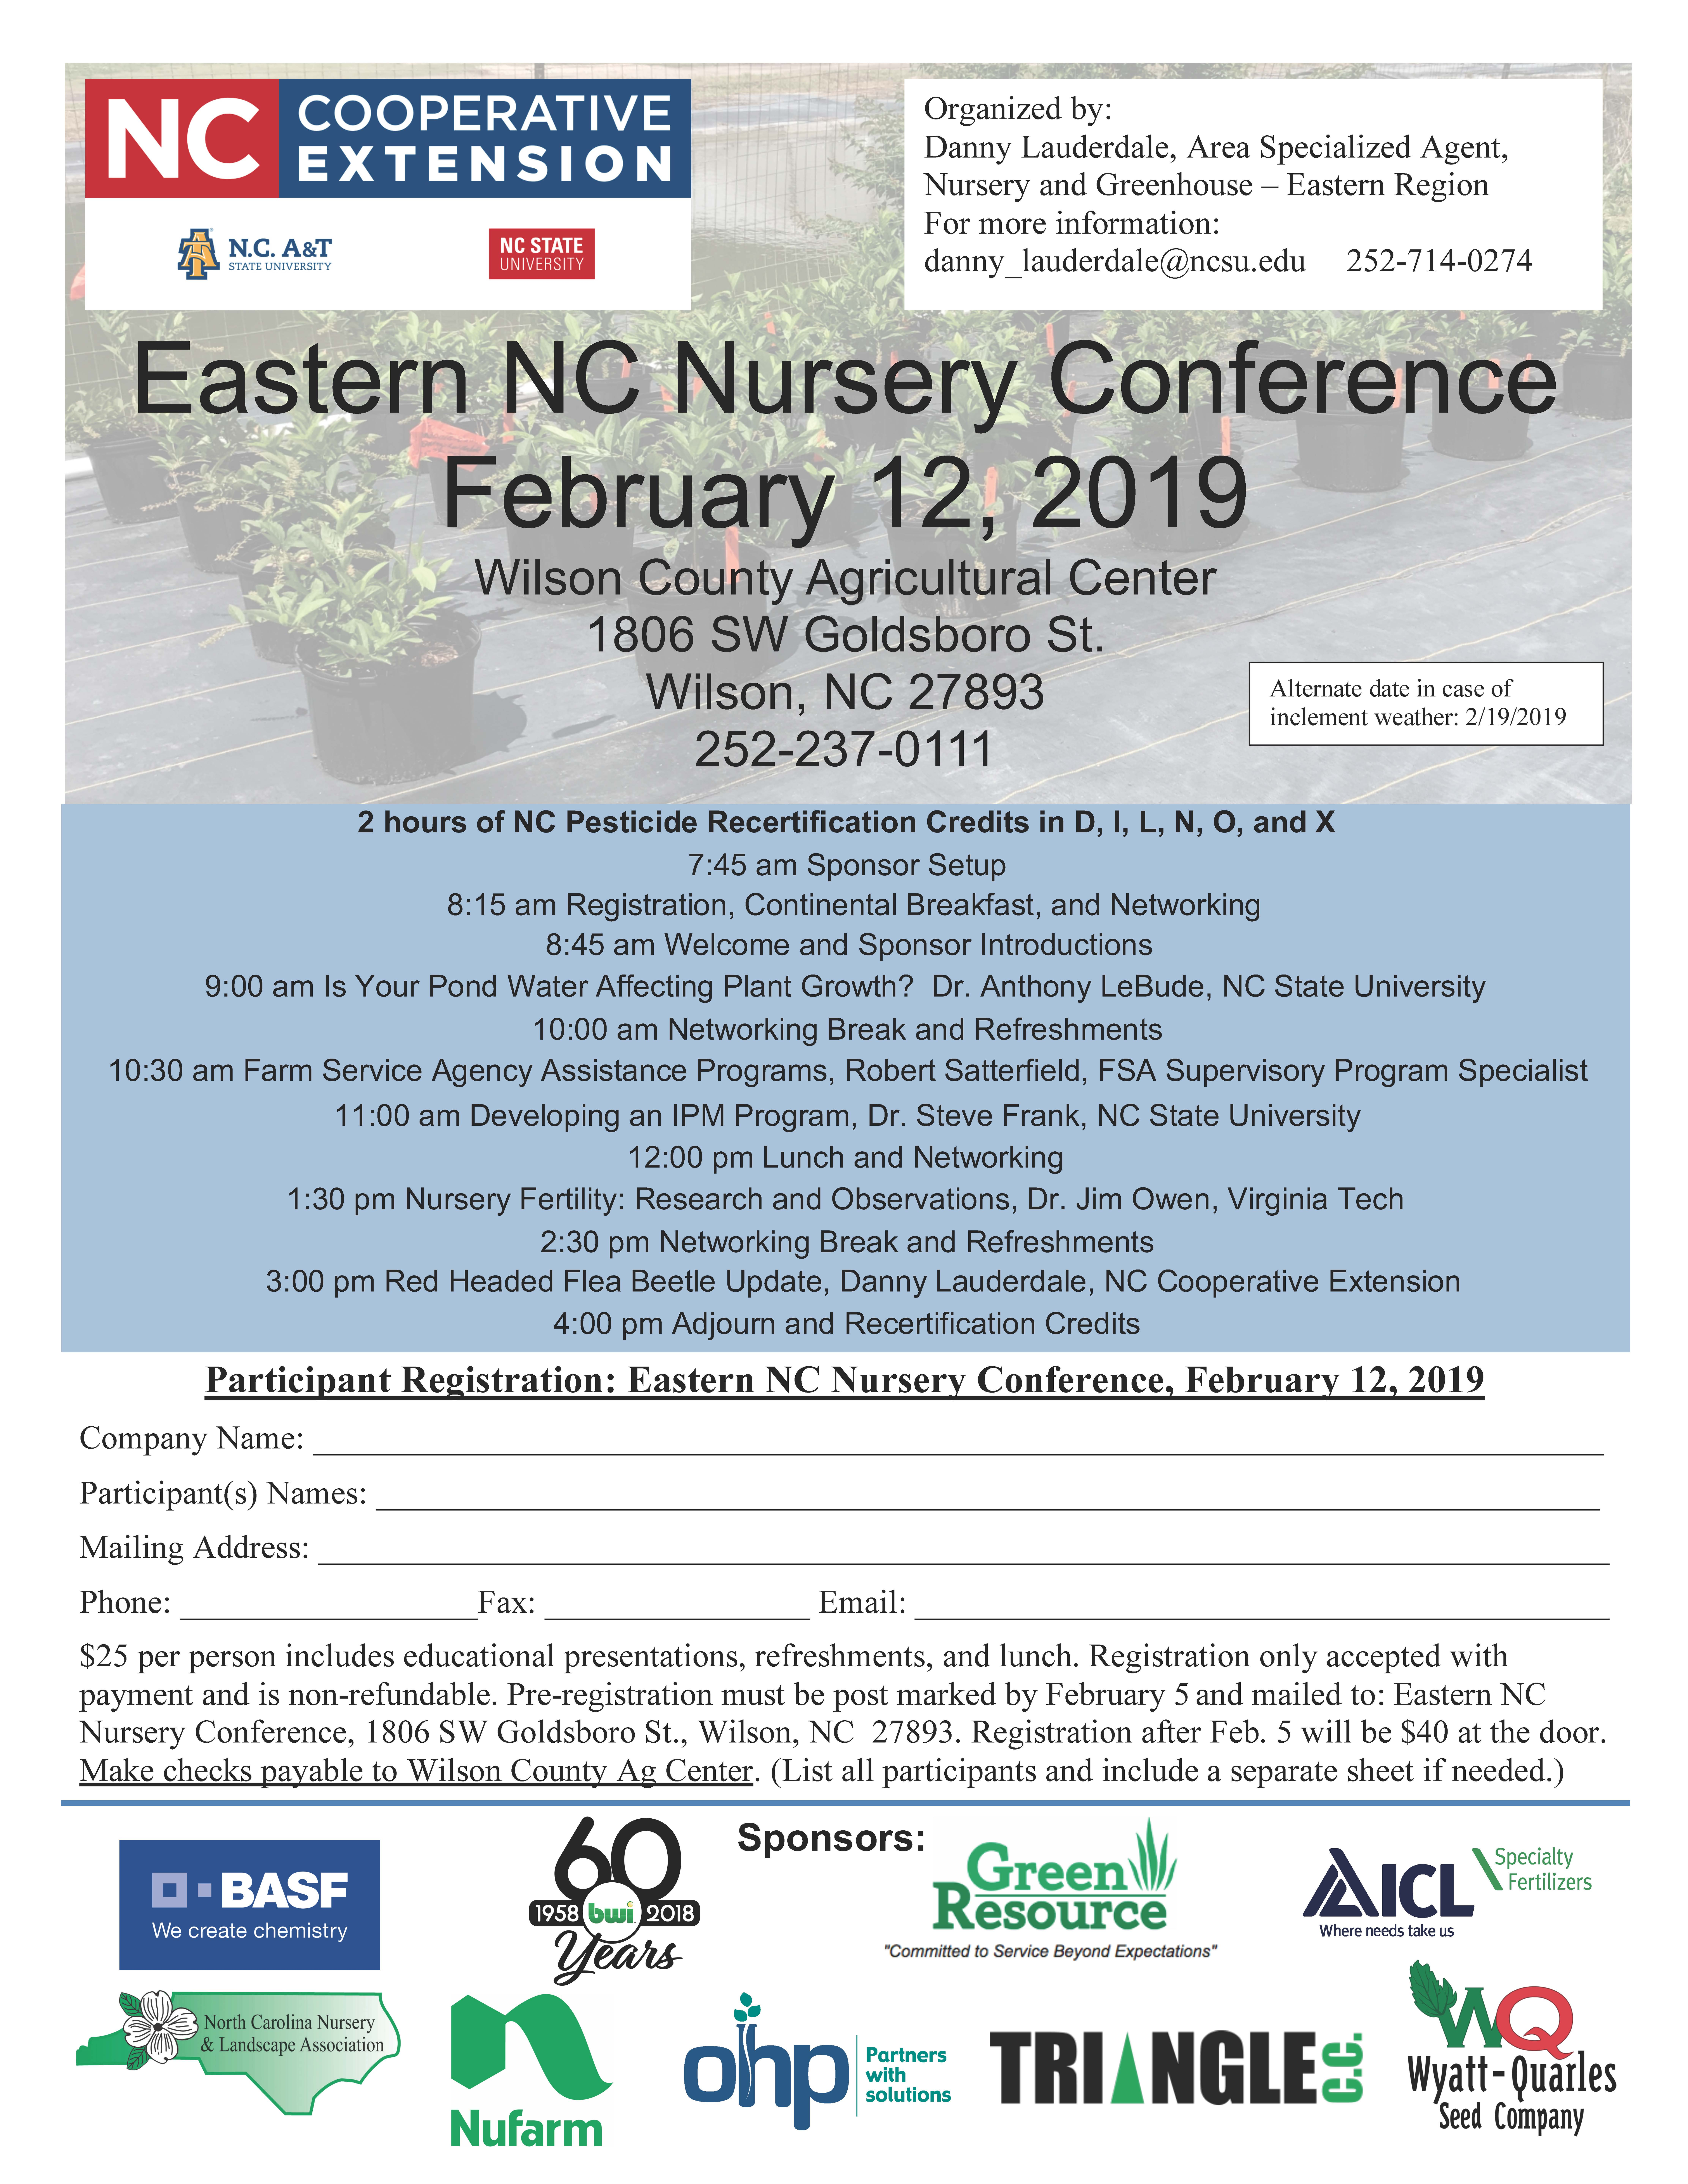 Eastern NC Nursery conference flyer